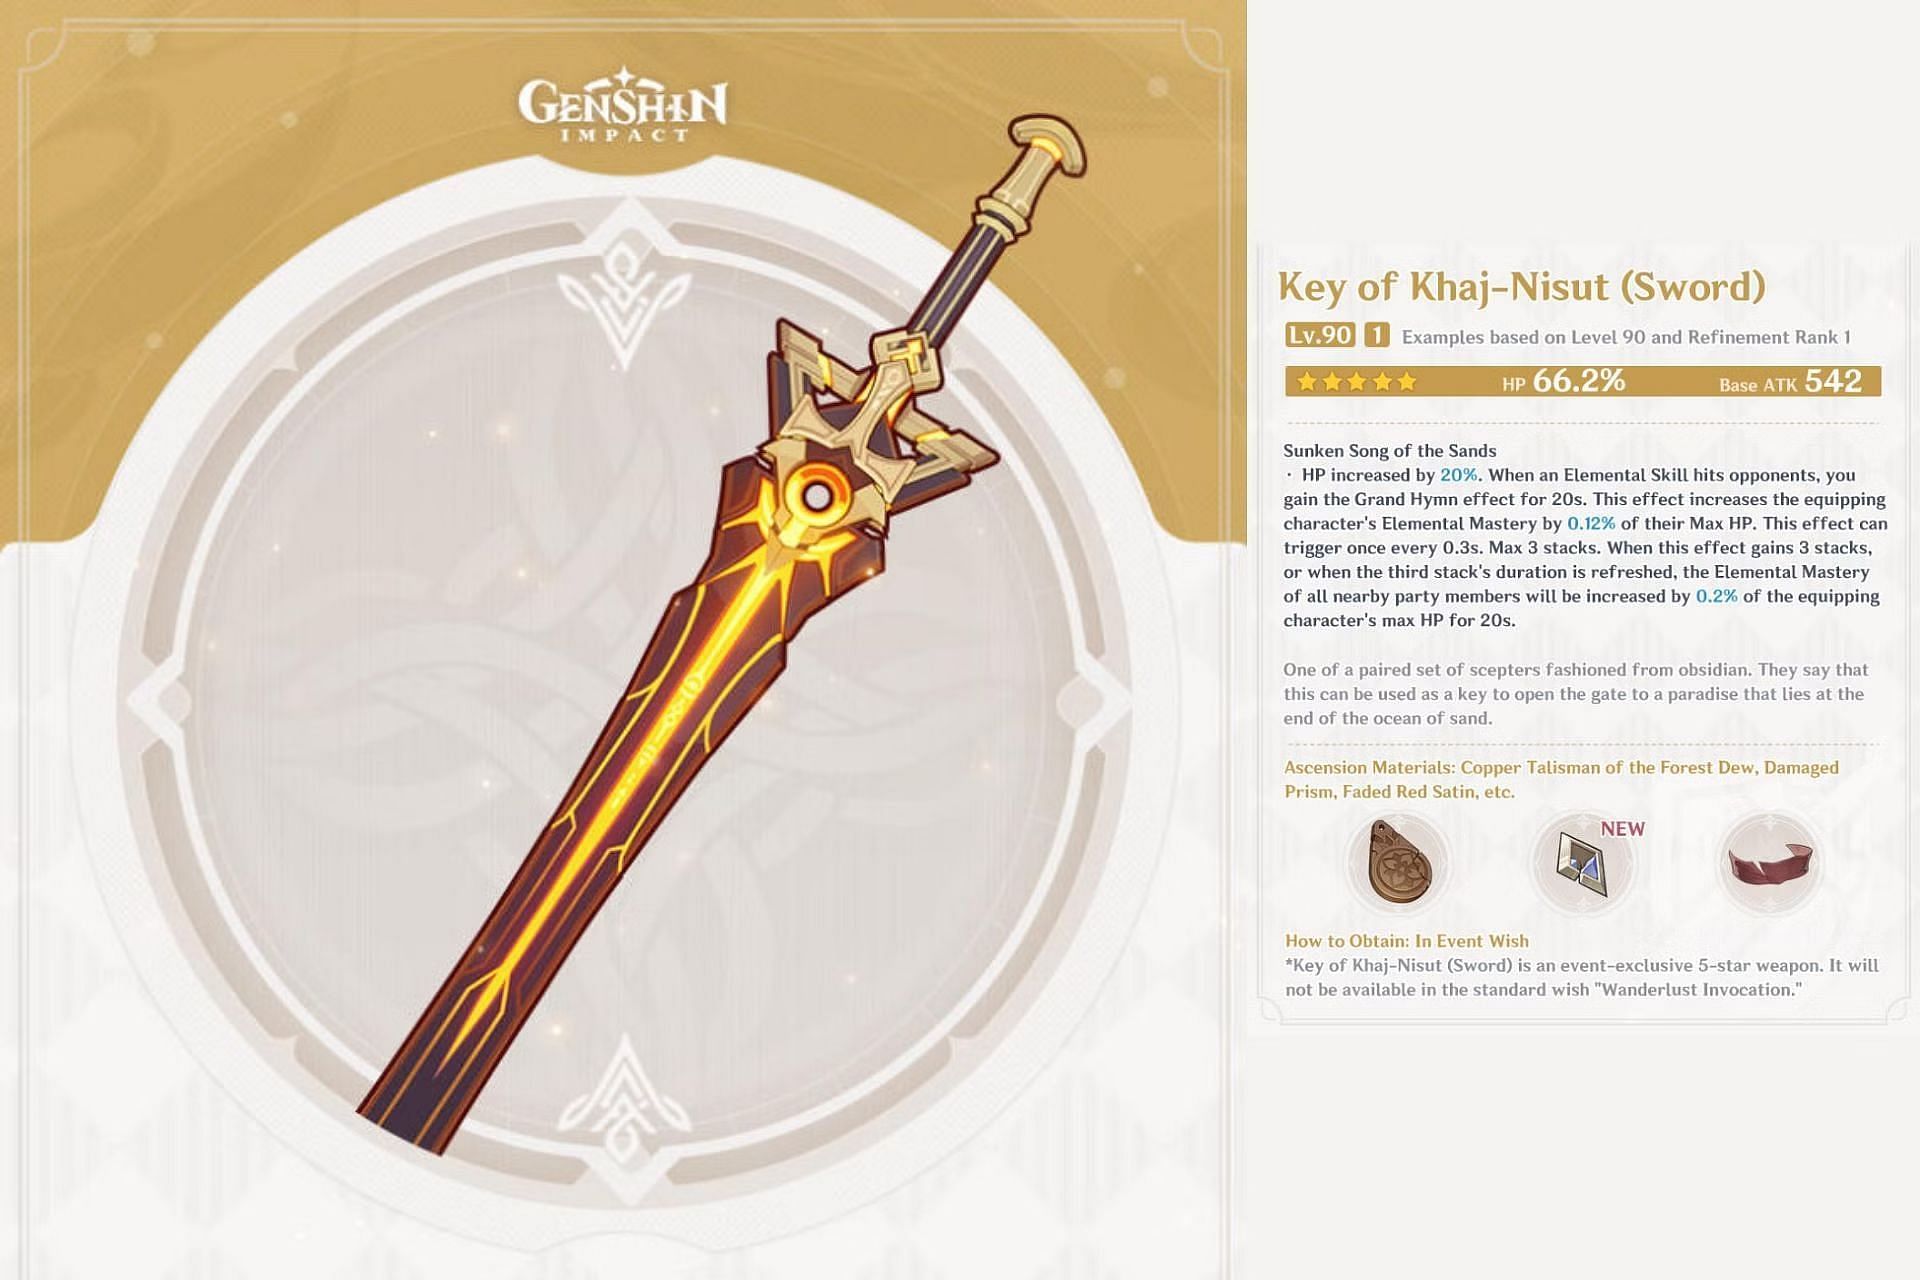 Key of Khaj-Nisut is a 5-star sword (Image via HoYoverse)